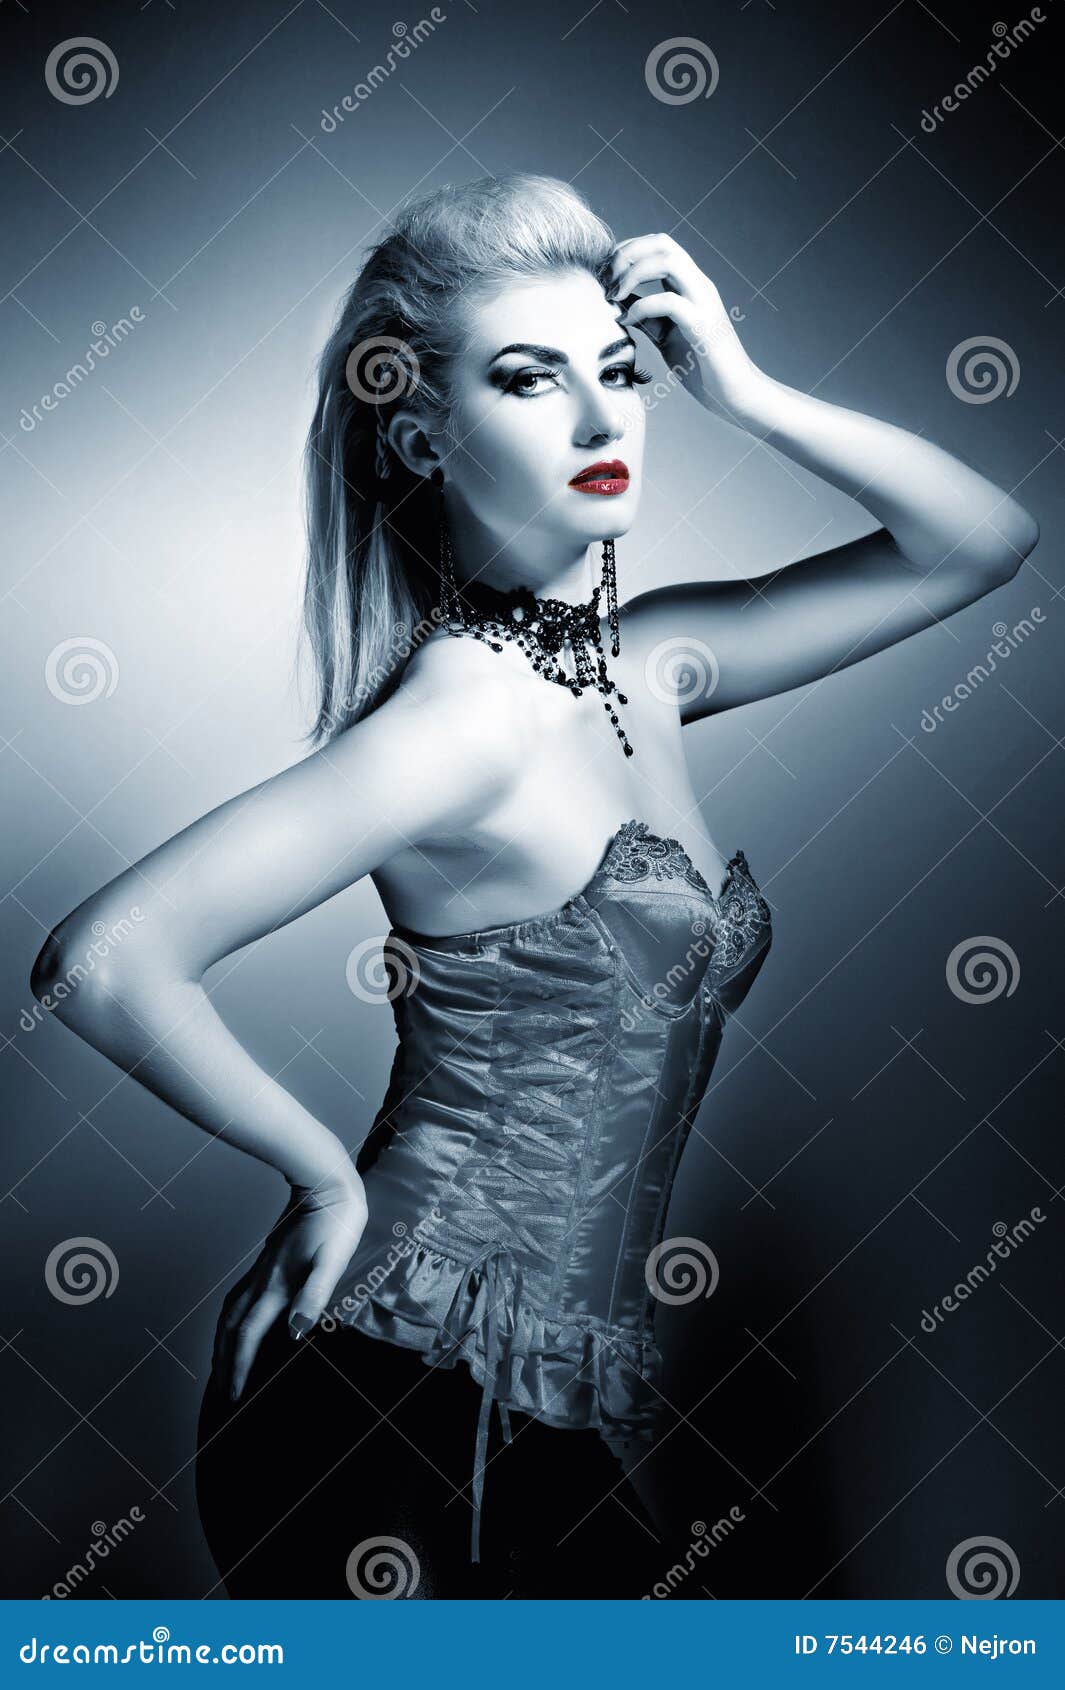 Gothic Woman Royalty Free Stock Image - Image: 7544246